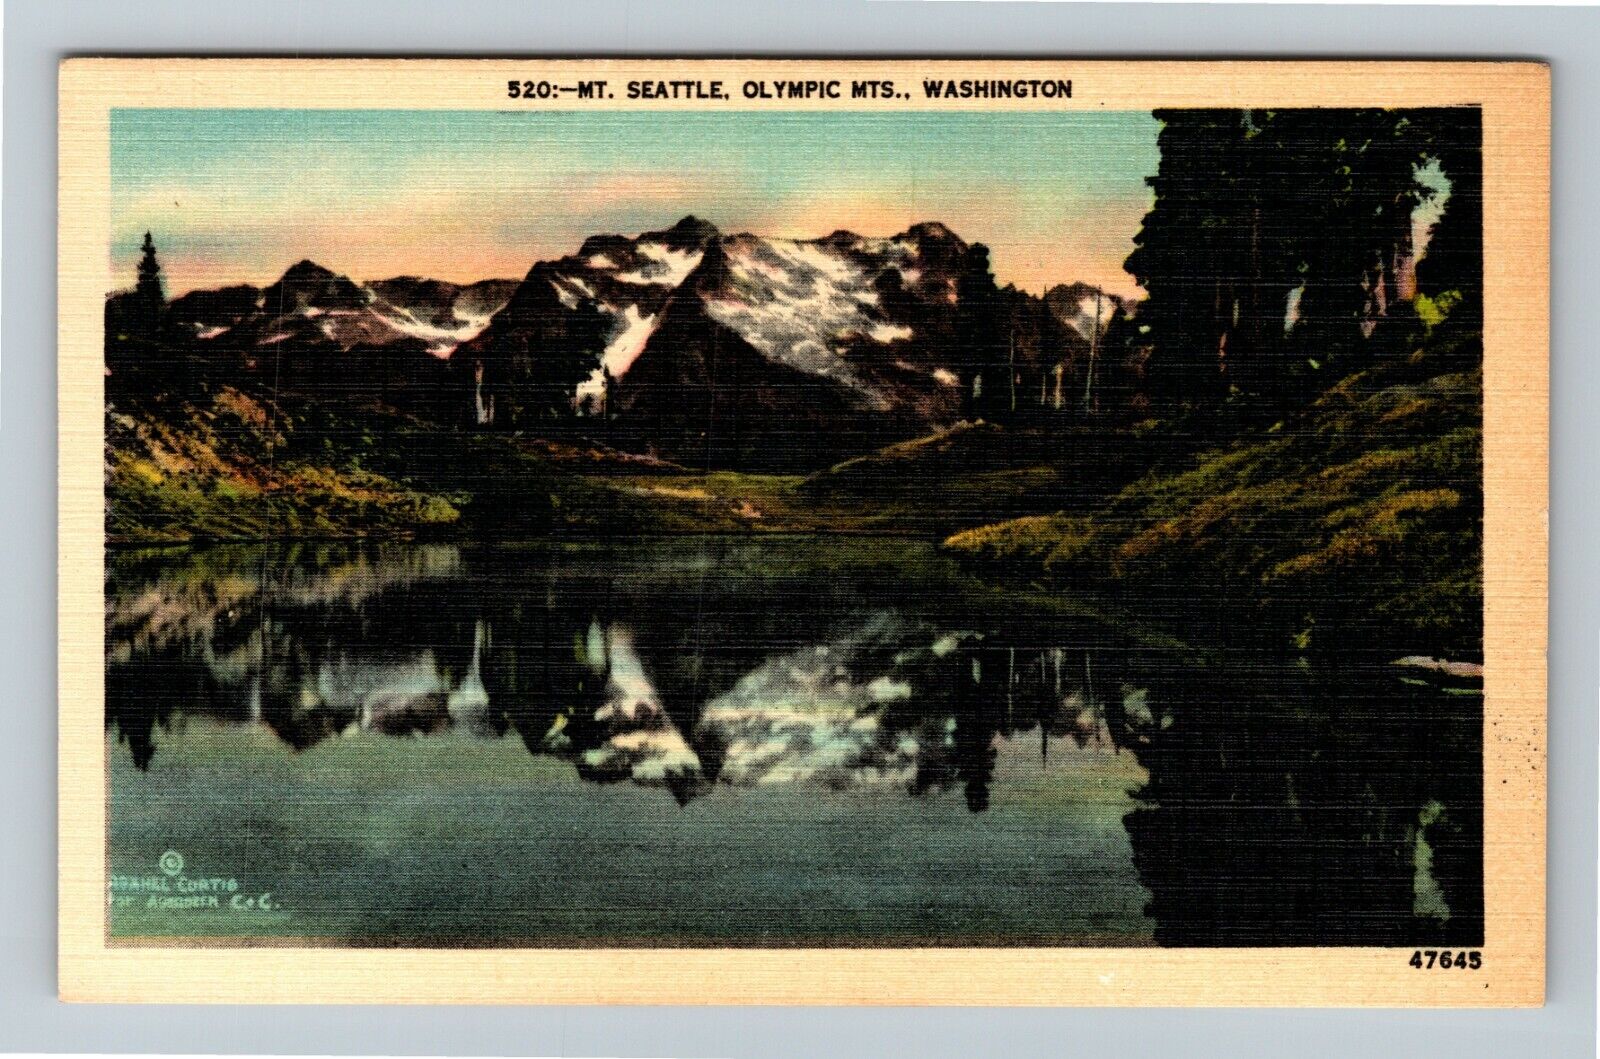 WA-Washington, Mt. Seattle, Olympic Mountains Vintage Souvenir Postcard